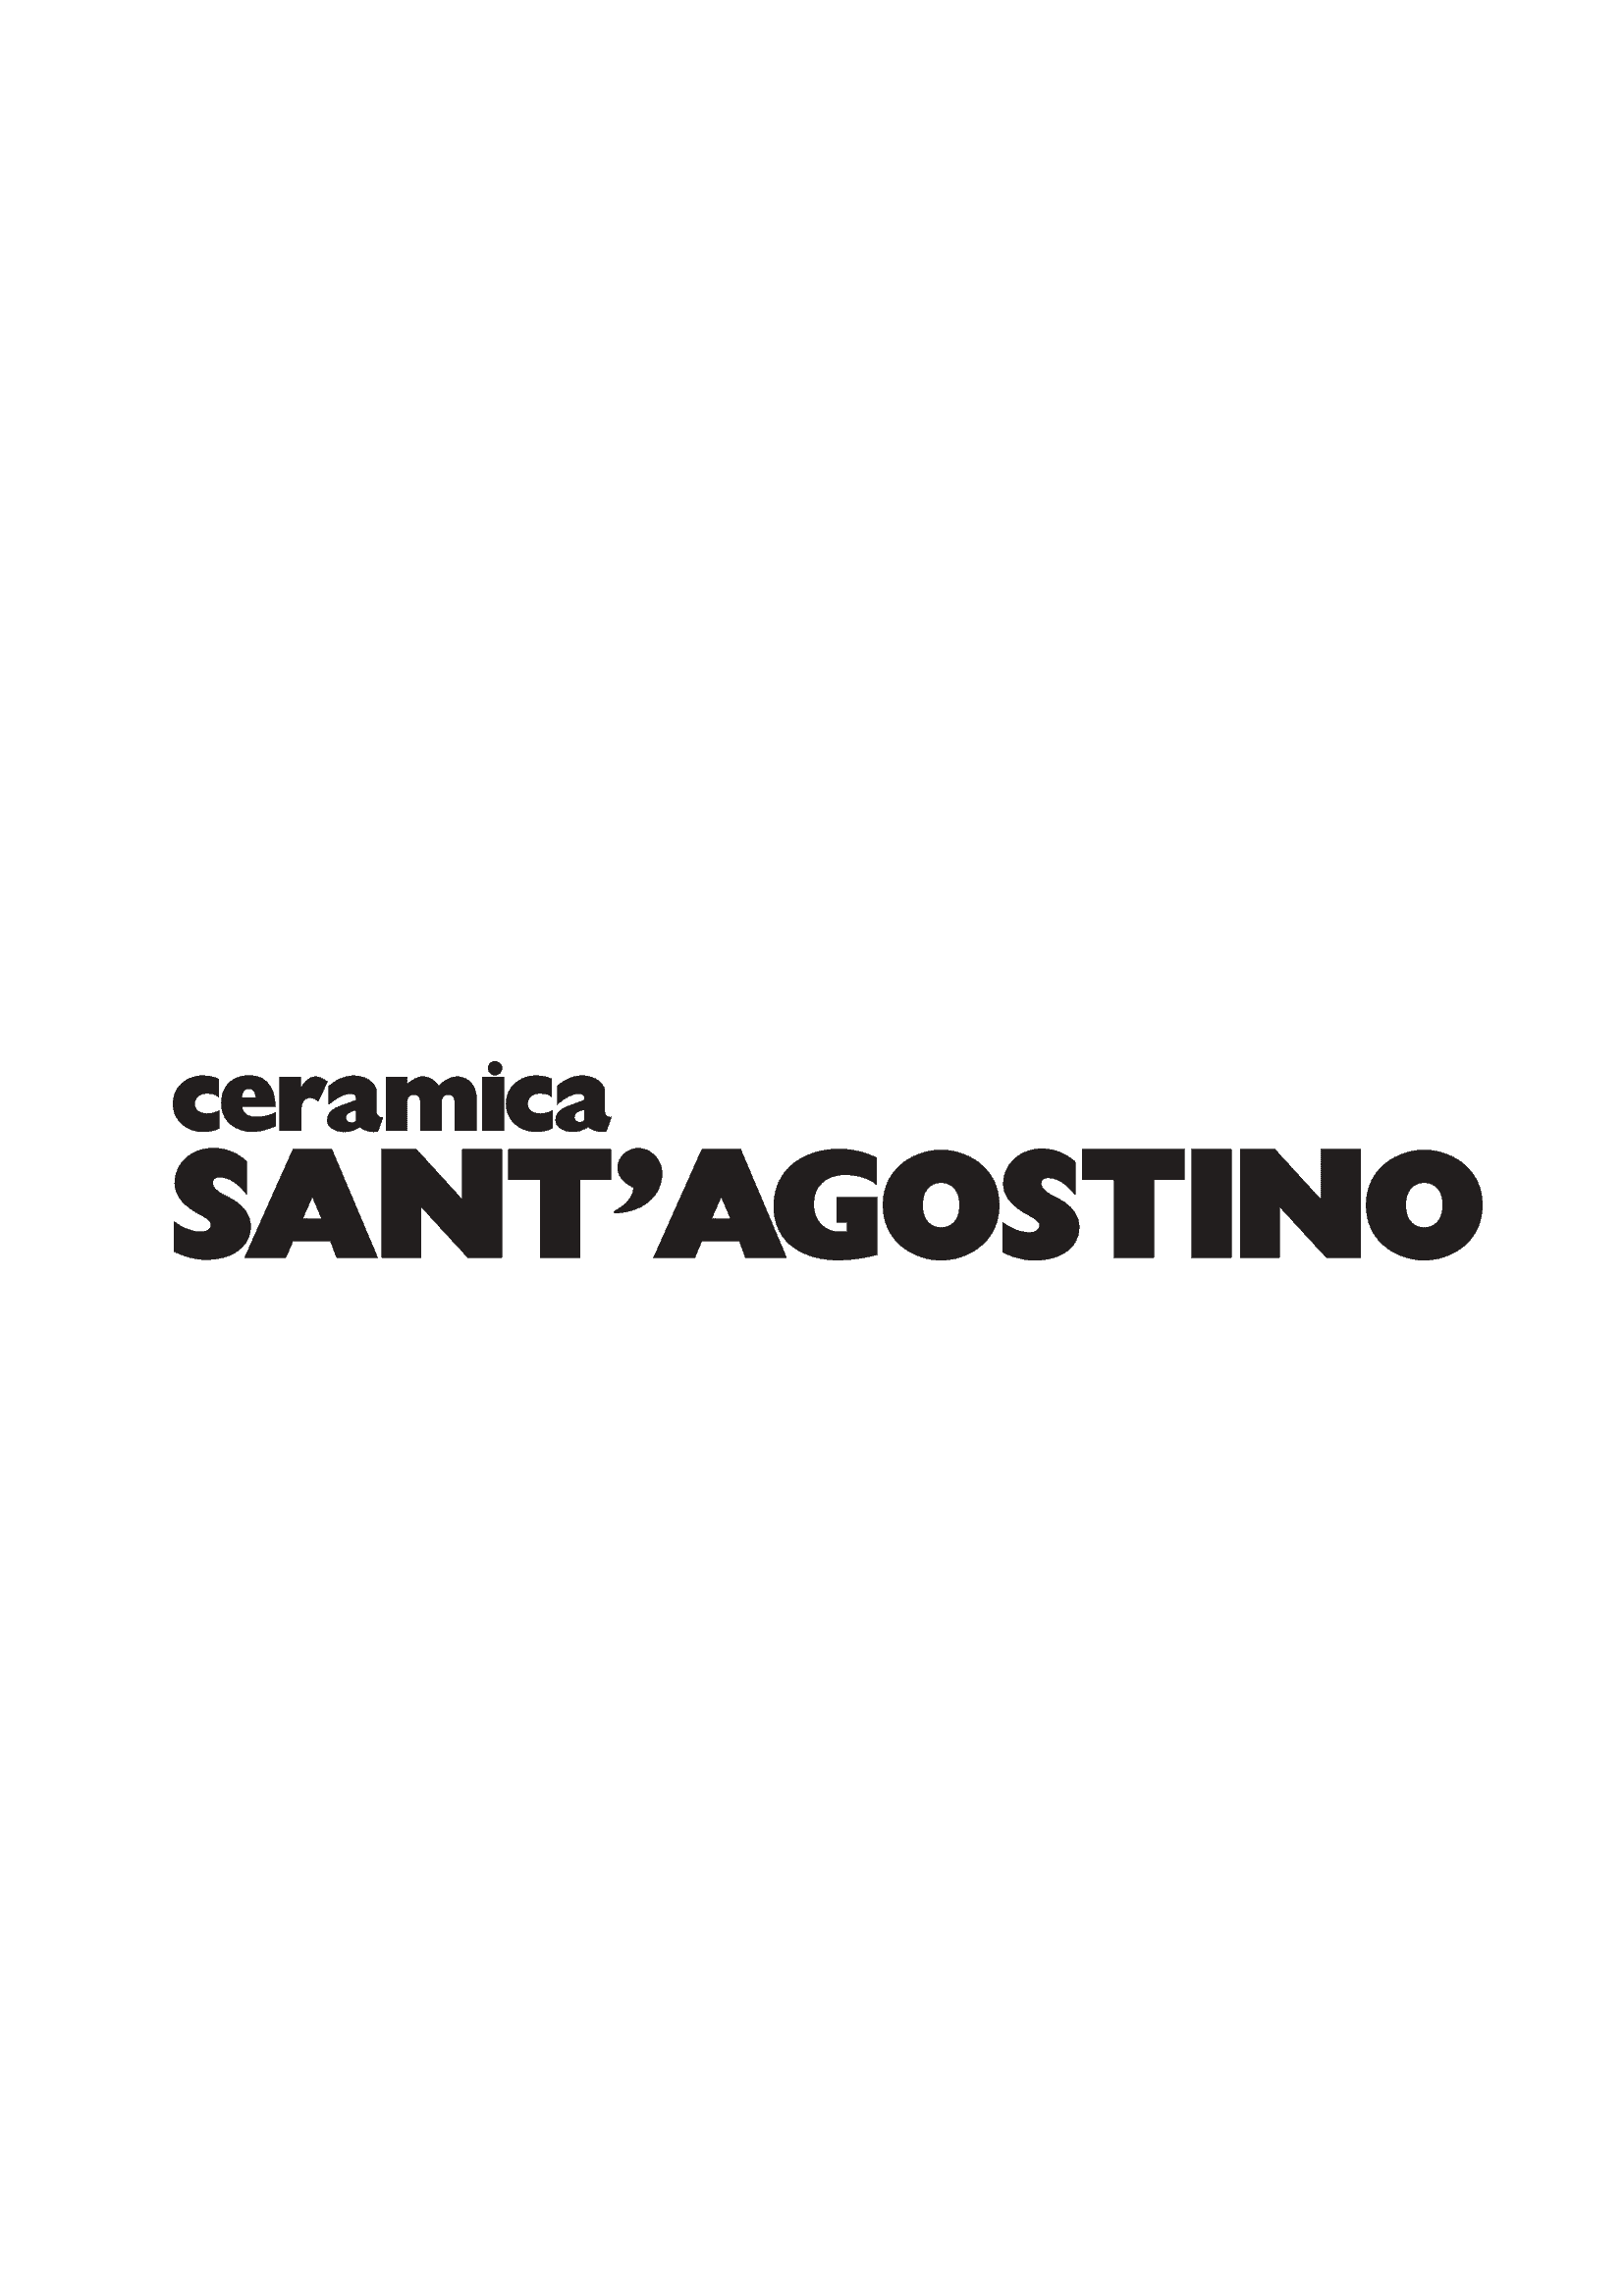 SANT'AGOSTINO_Logo.png